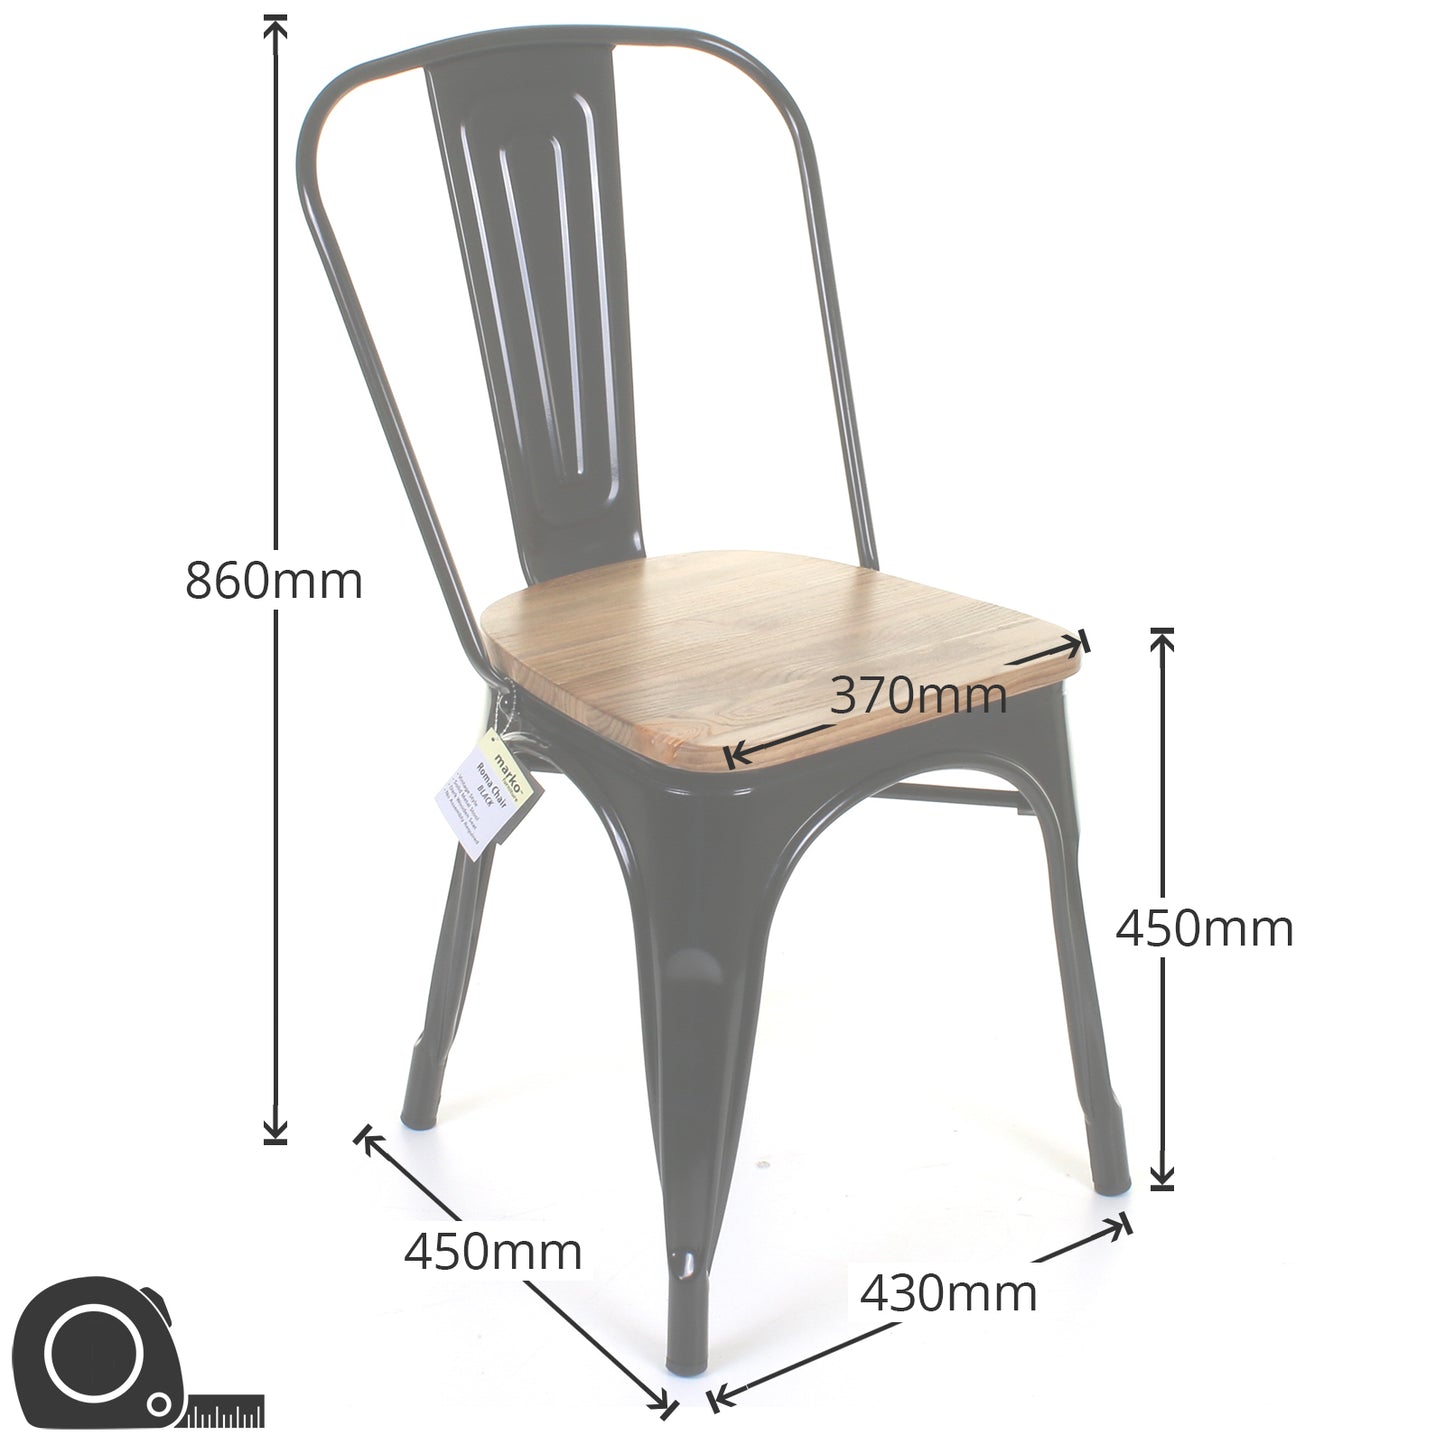 5PC Prato Table & 4 Palermo Chairs Set - Graphite Grey